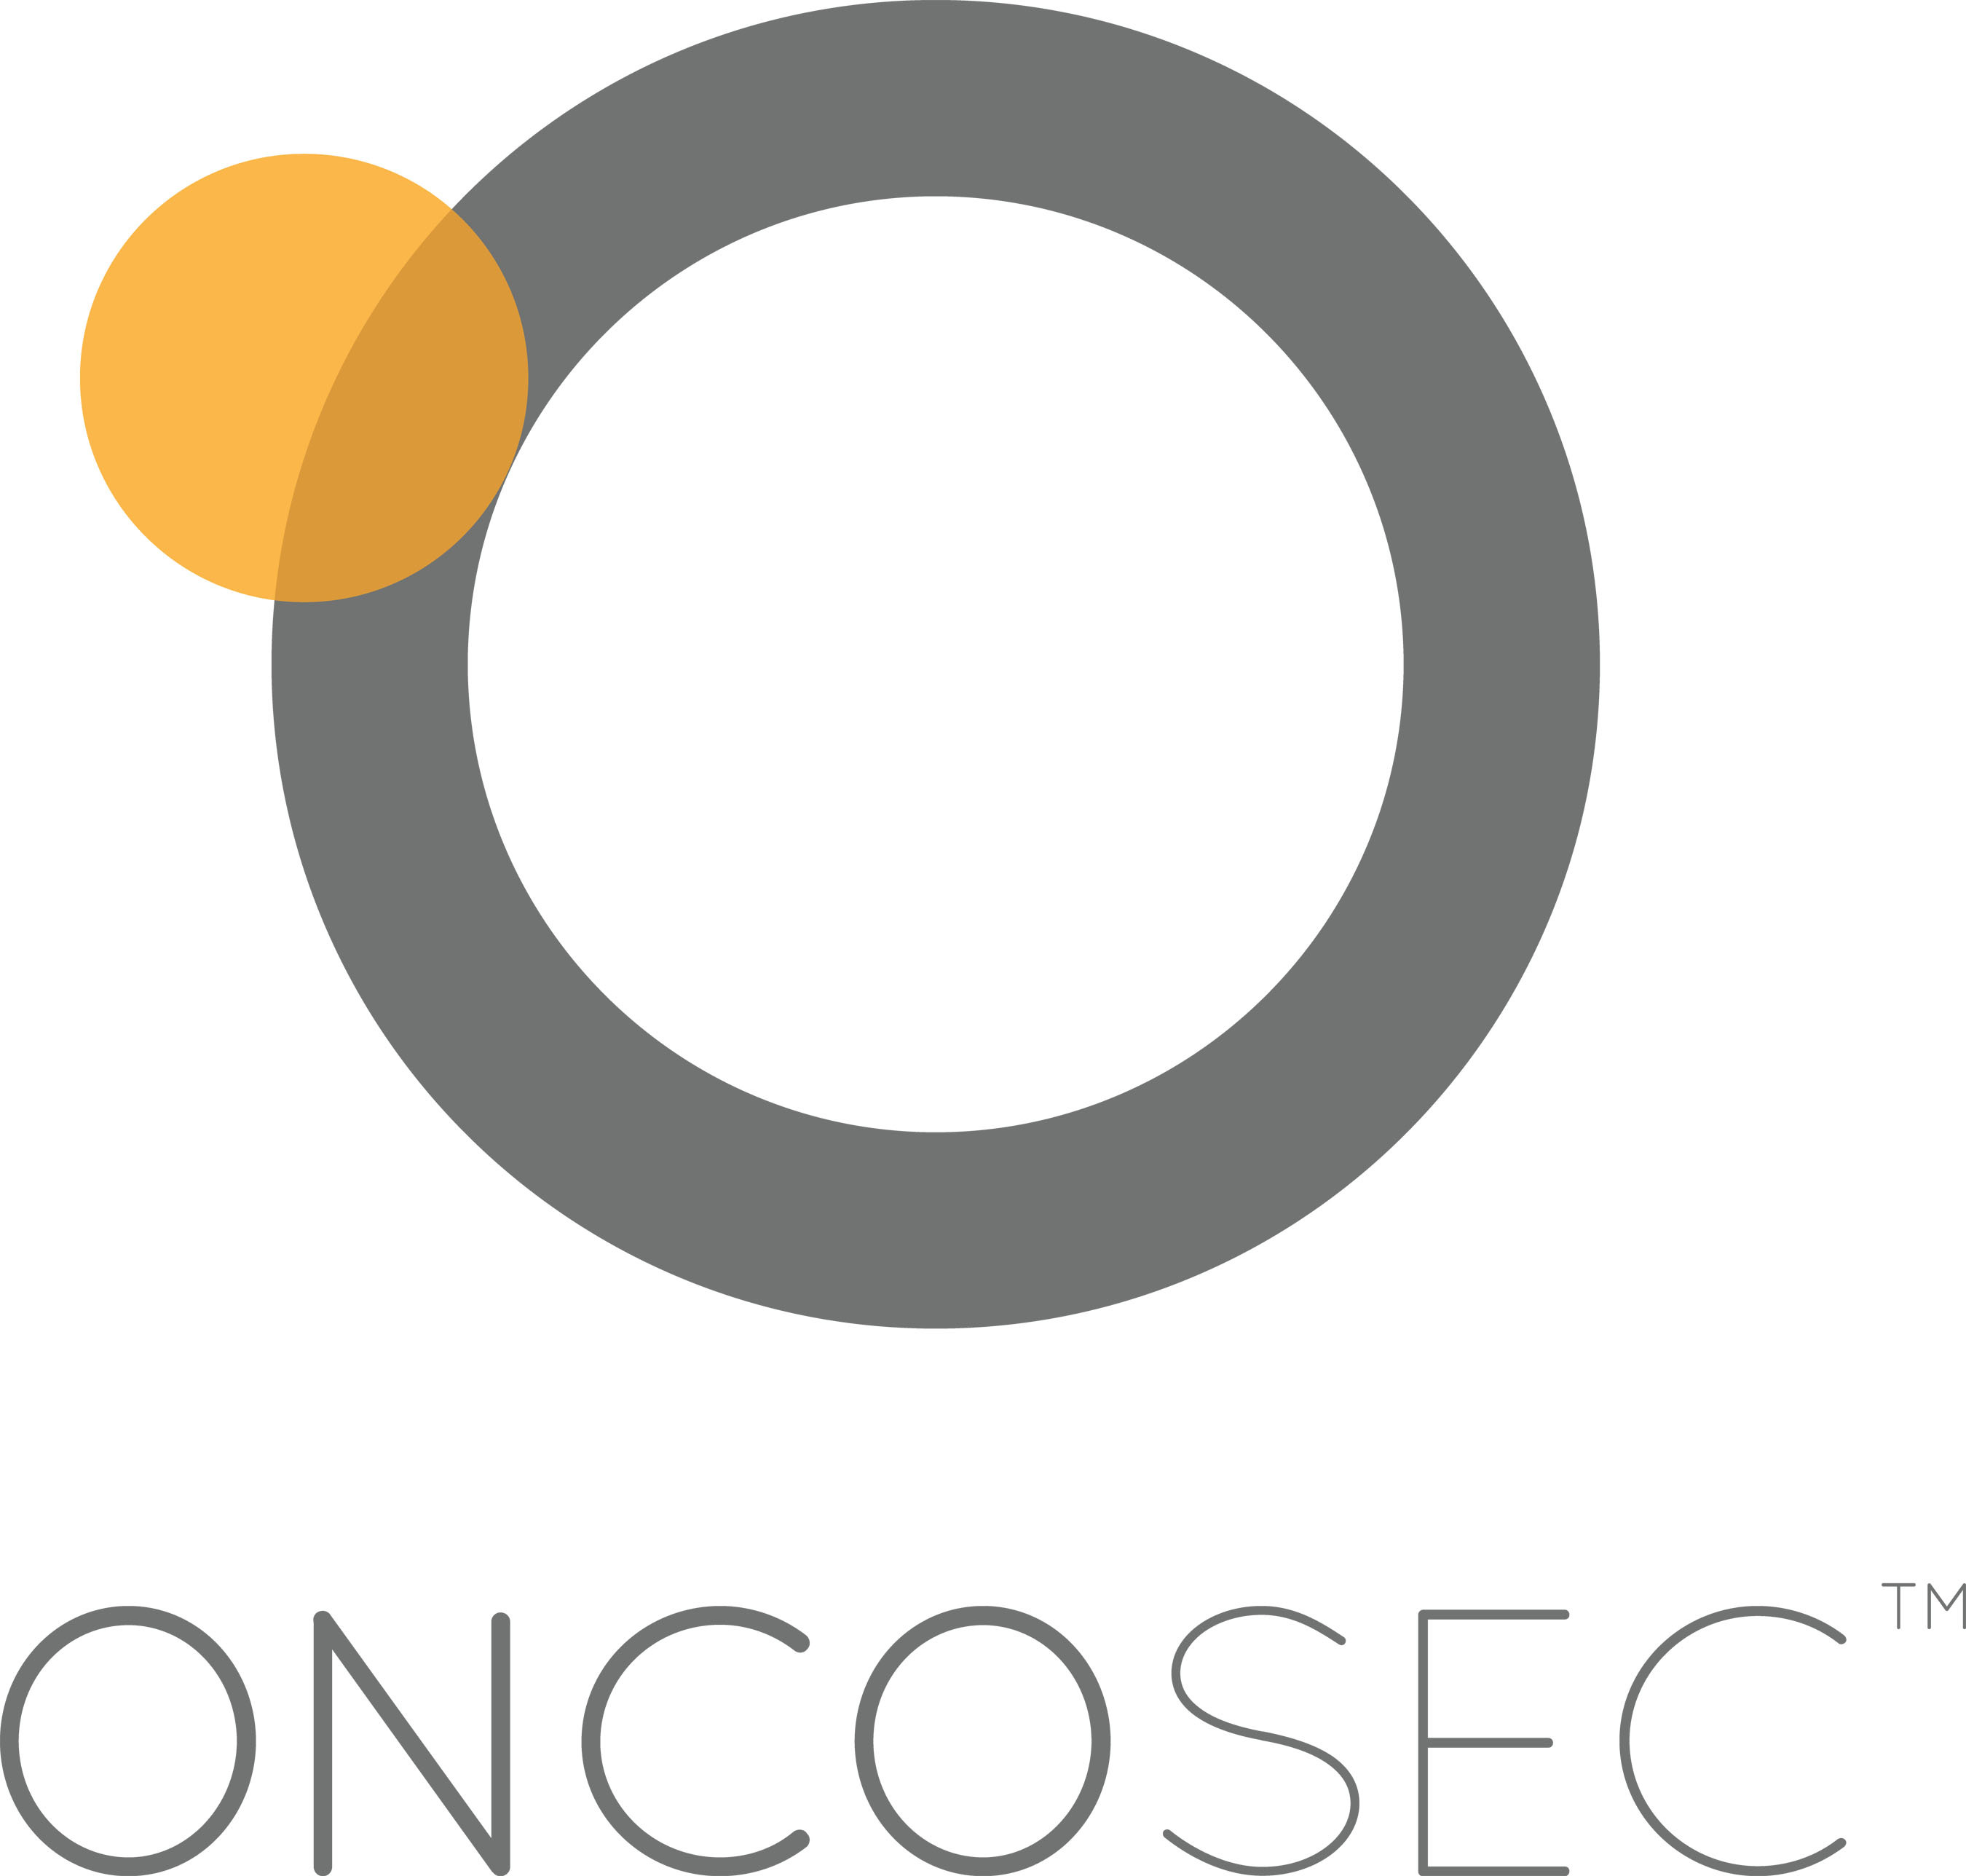 OncoSec Medical, Inc. Logo. Please visit http://oncosec.com/ for more information